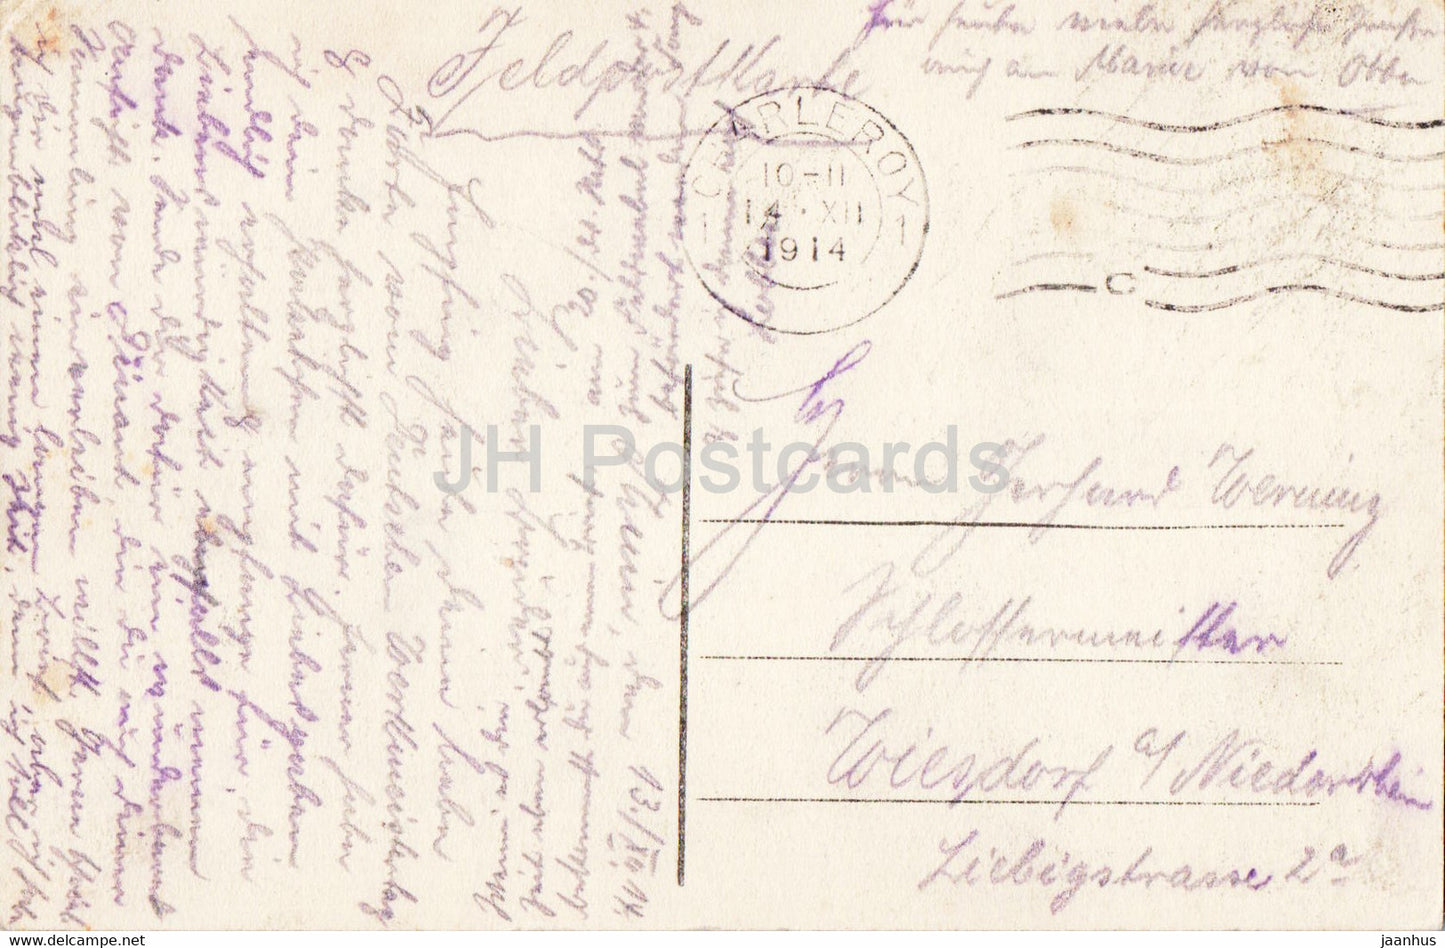 Dinant - Panorama - 9 - alte Postkarte - 1914 - Belgien - gebraucht